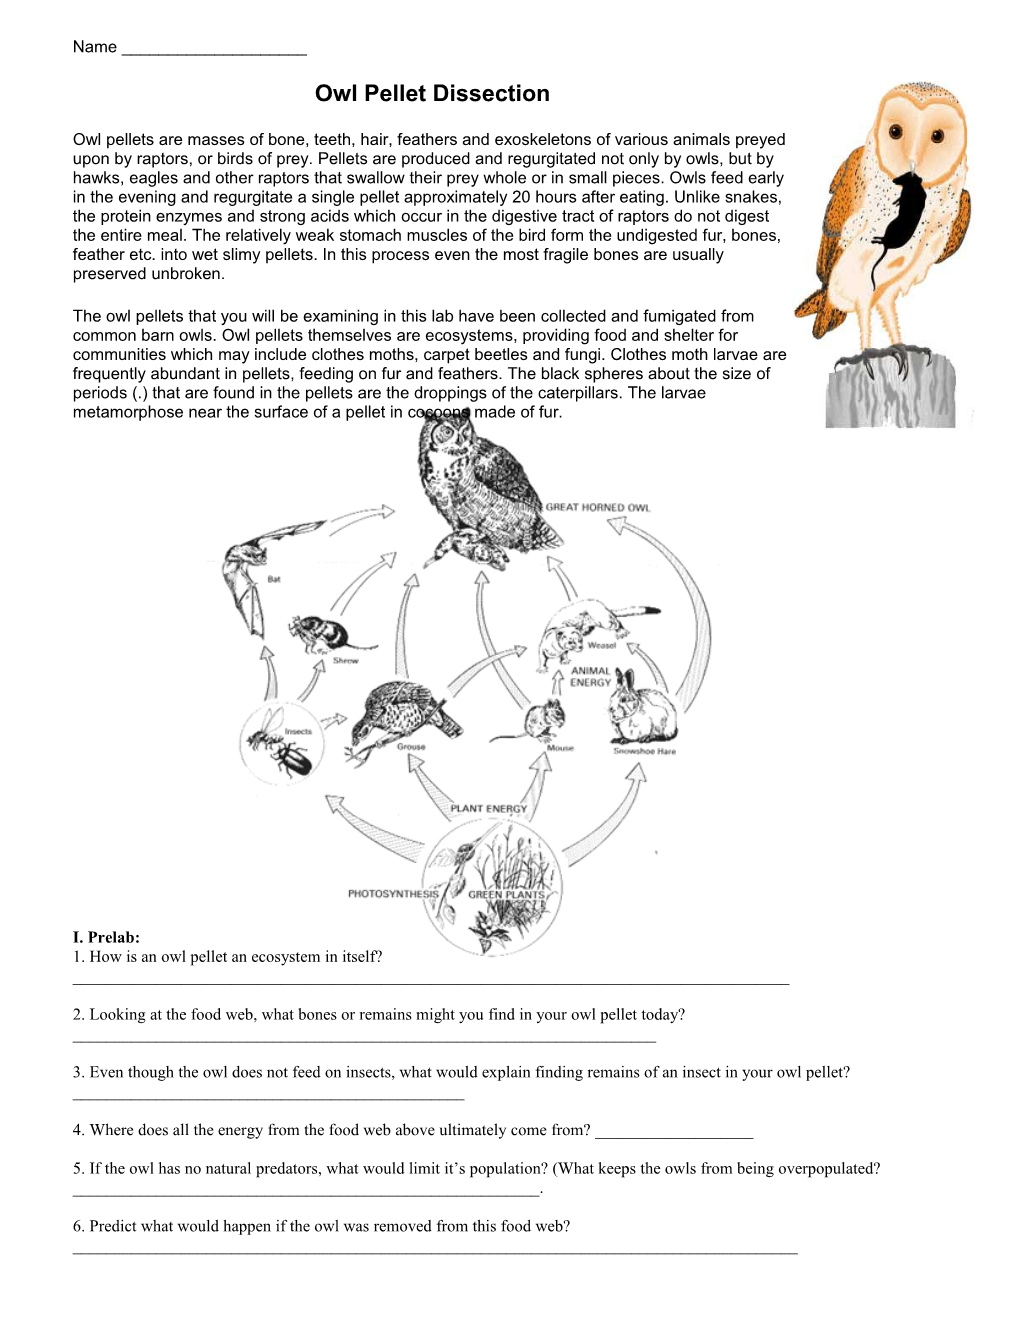 1. How Is an Owl Pellet an Ecosystem in Itself? ______